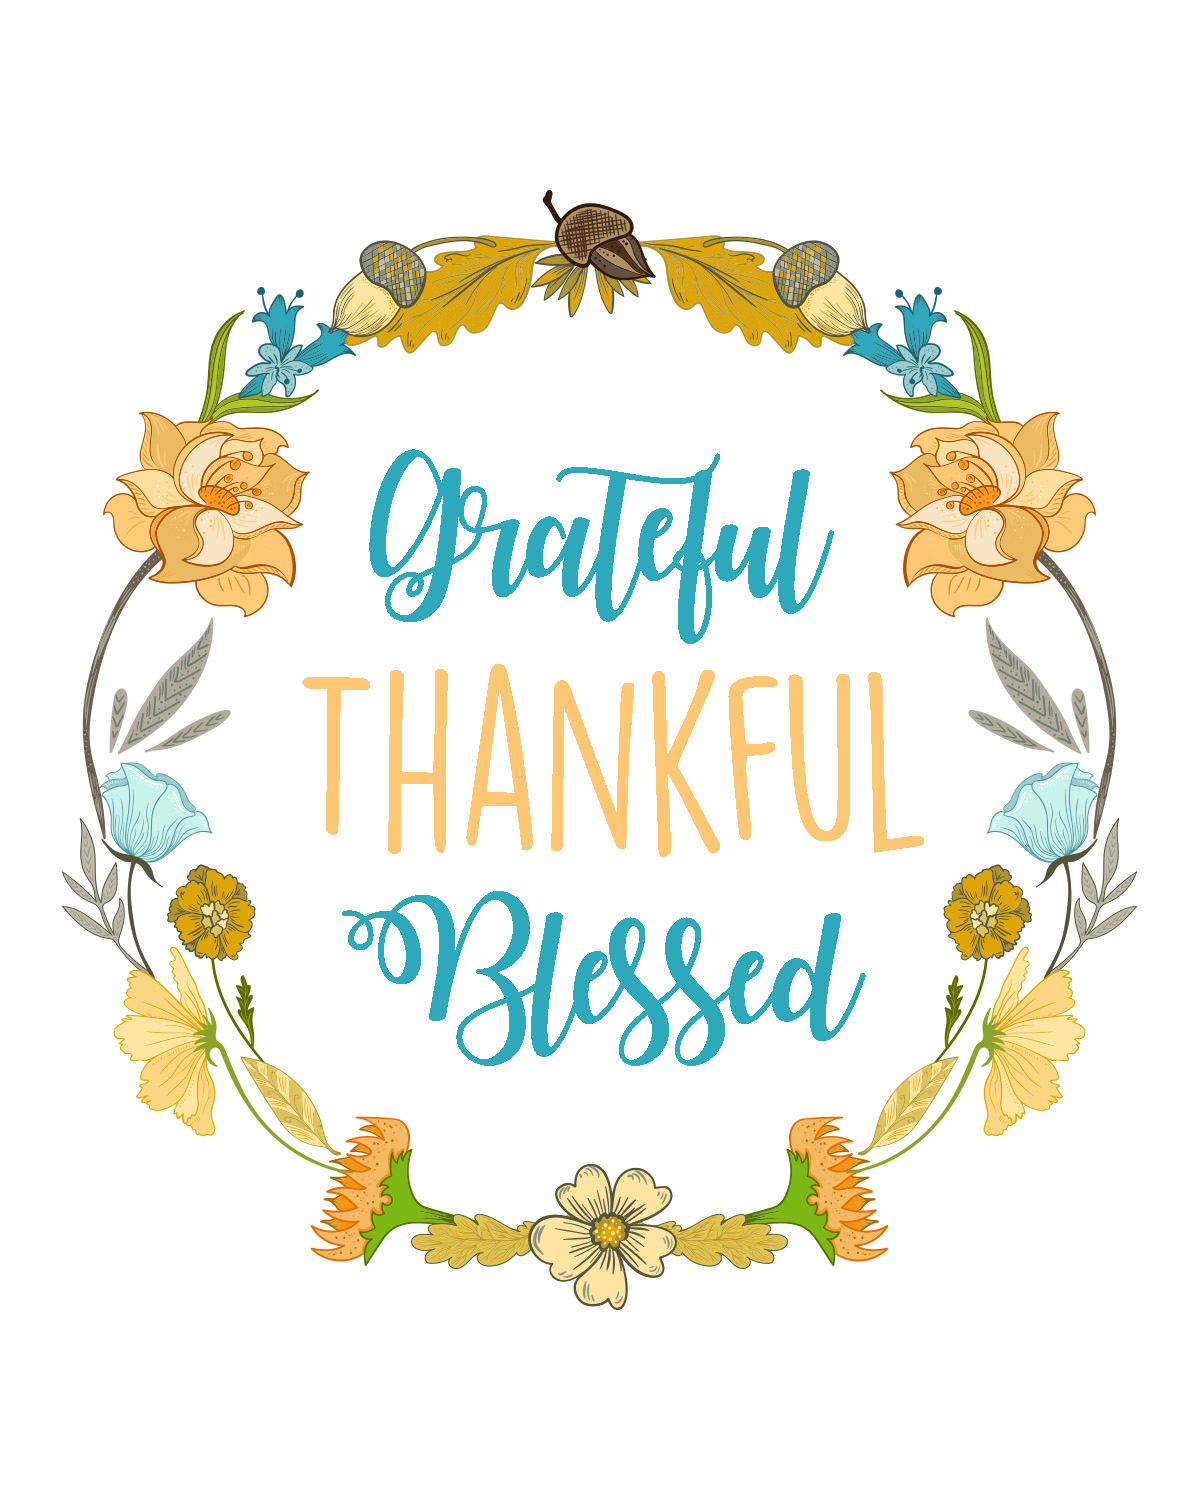 Grateful thankful blessed